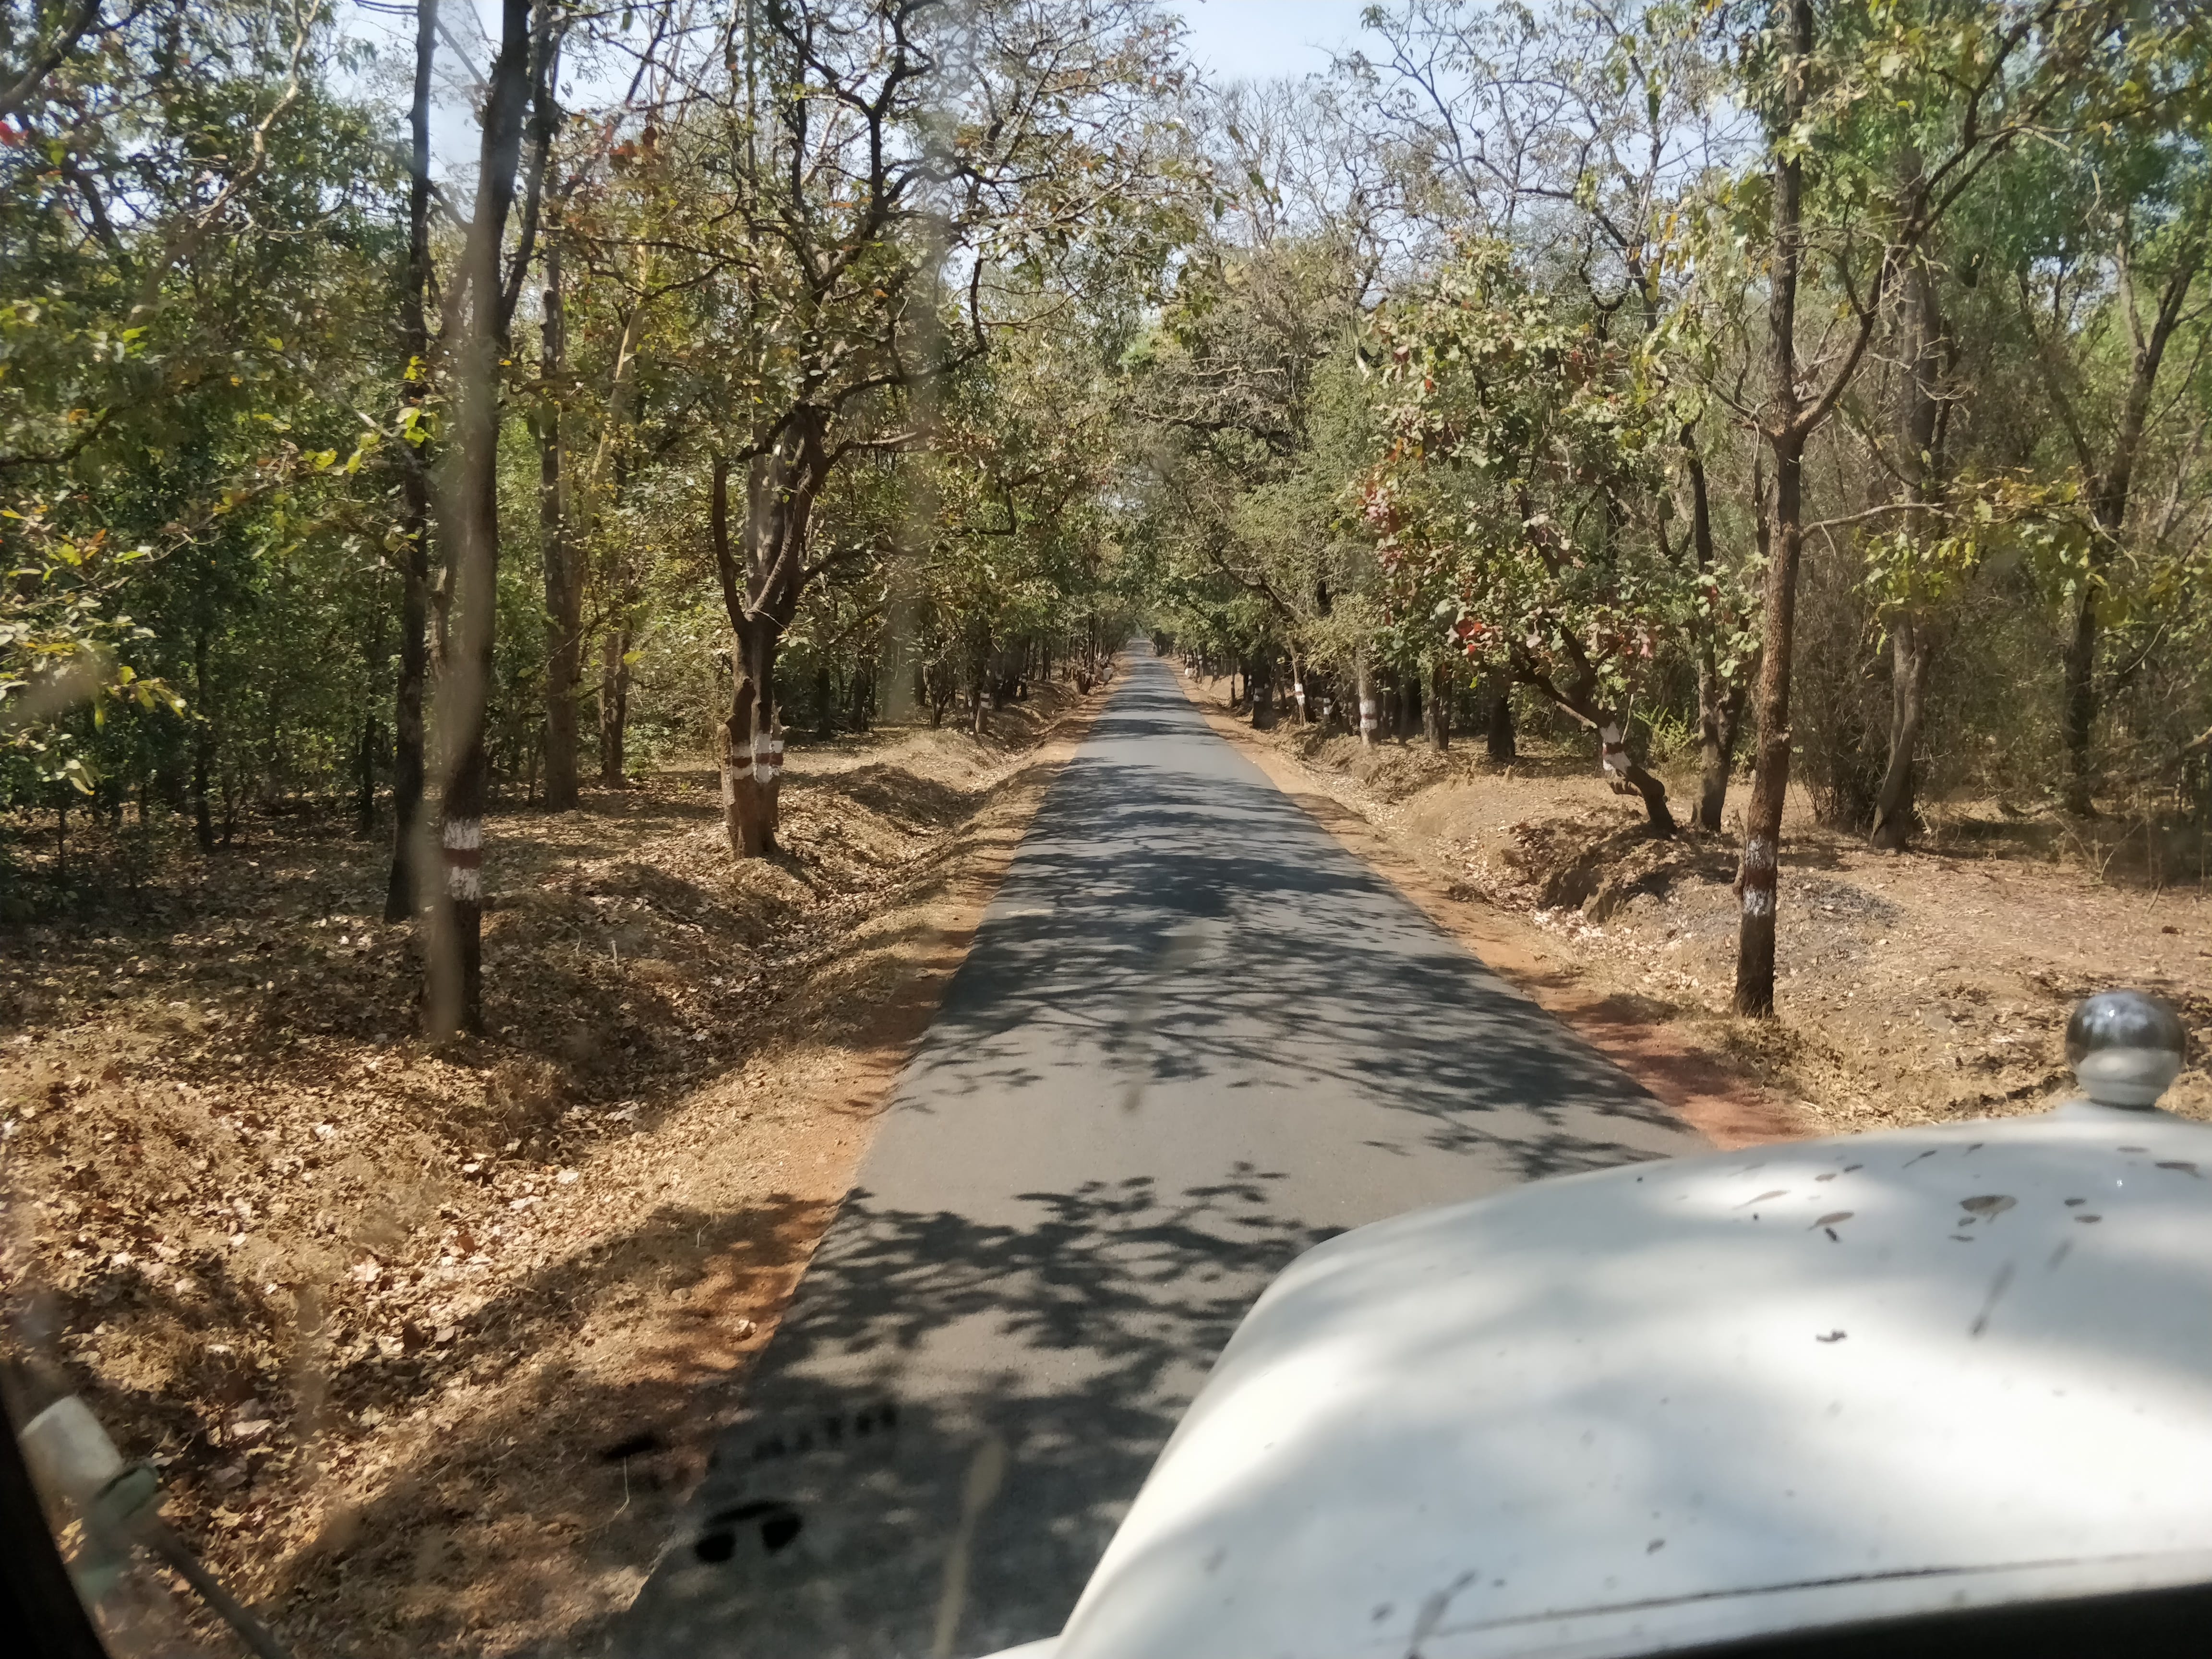 bhimgad forest - tipper journey from hemmadga cross to hemmadga check post